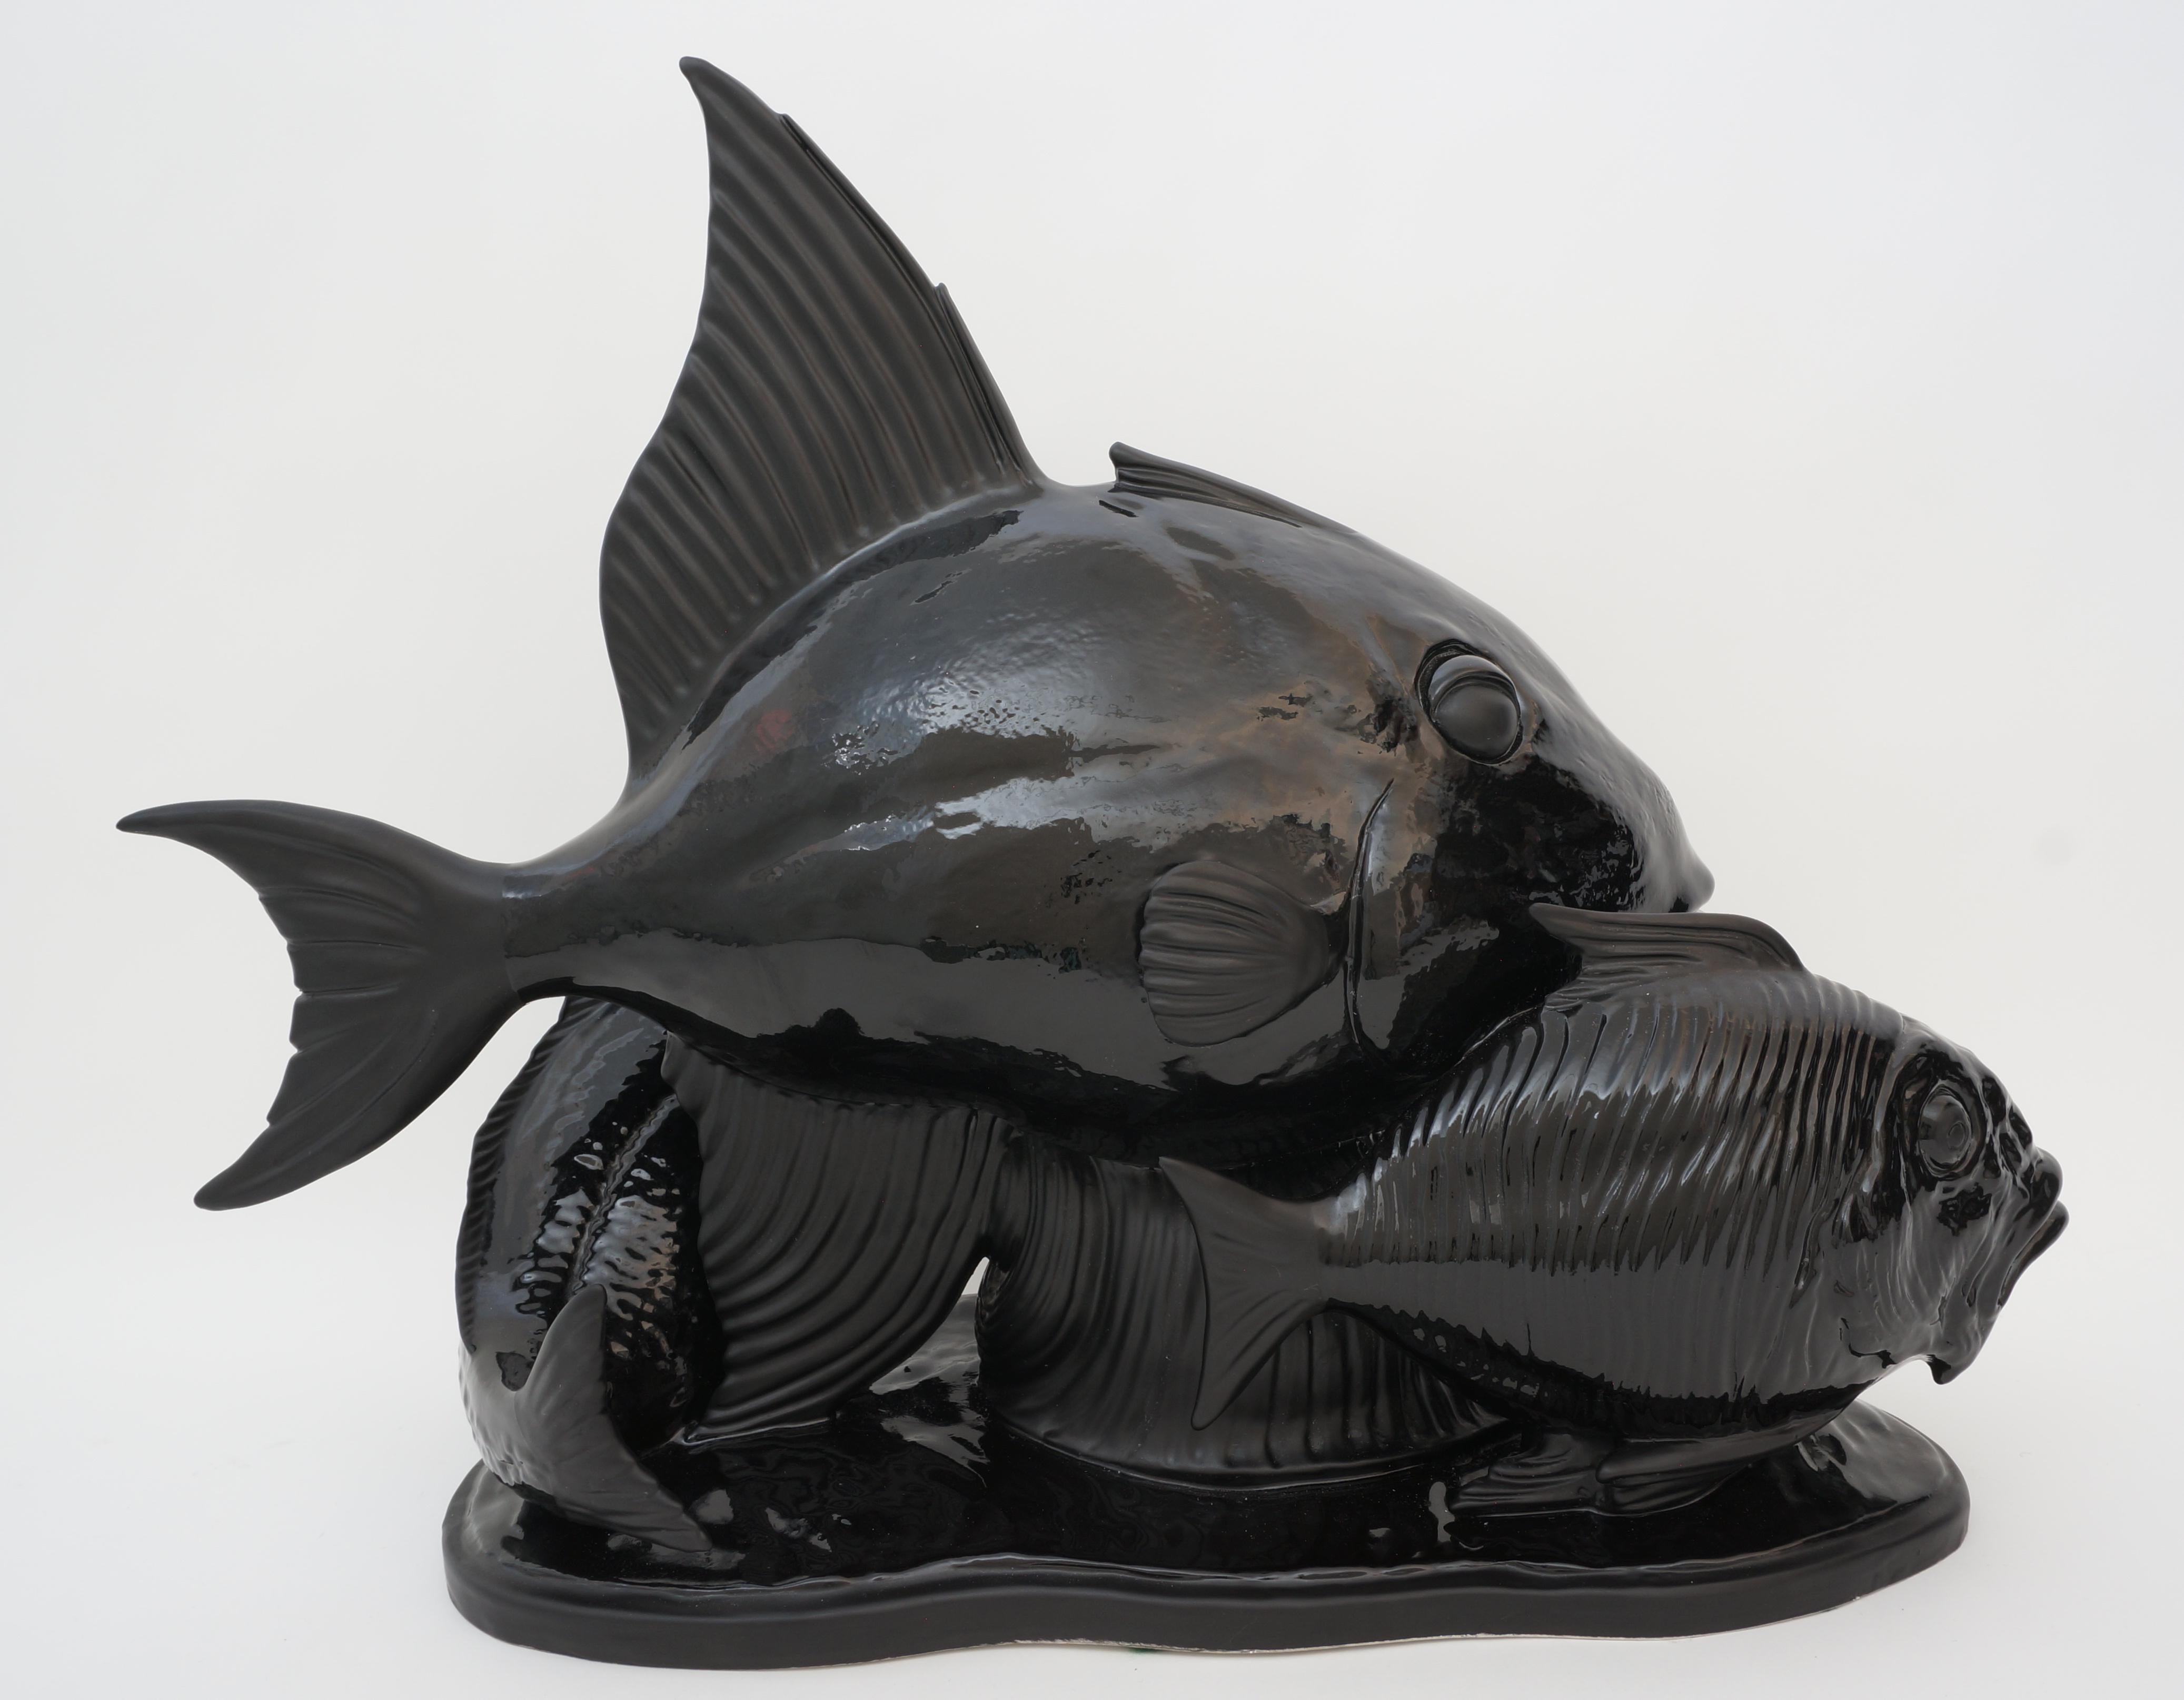 Italian Art Deco Lejan Style Sculpture School of Fish For Sale